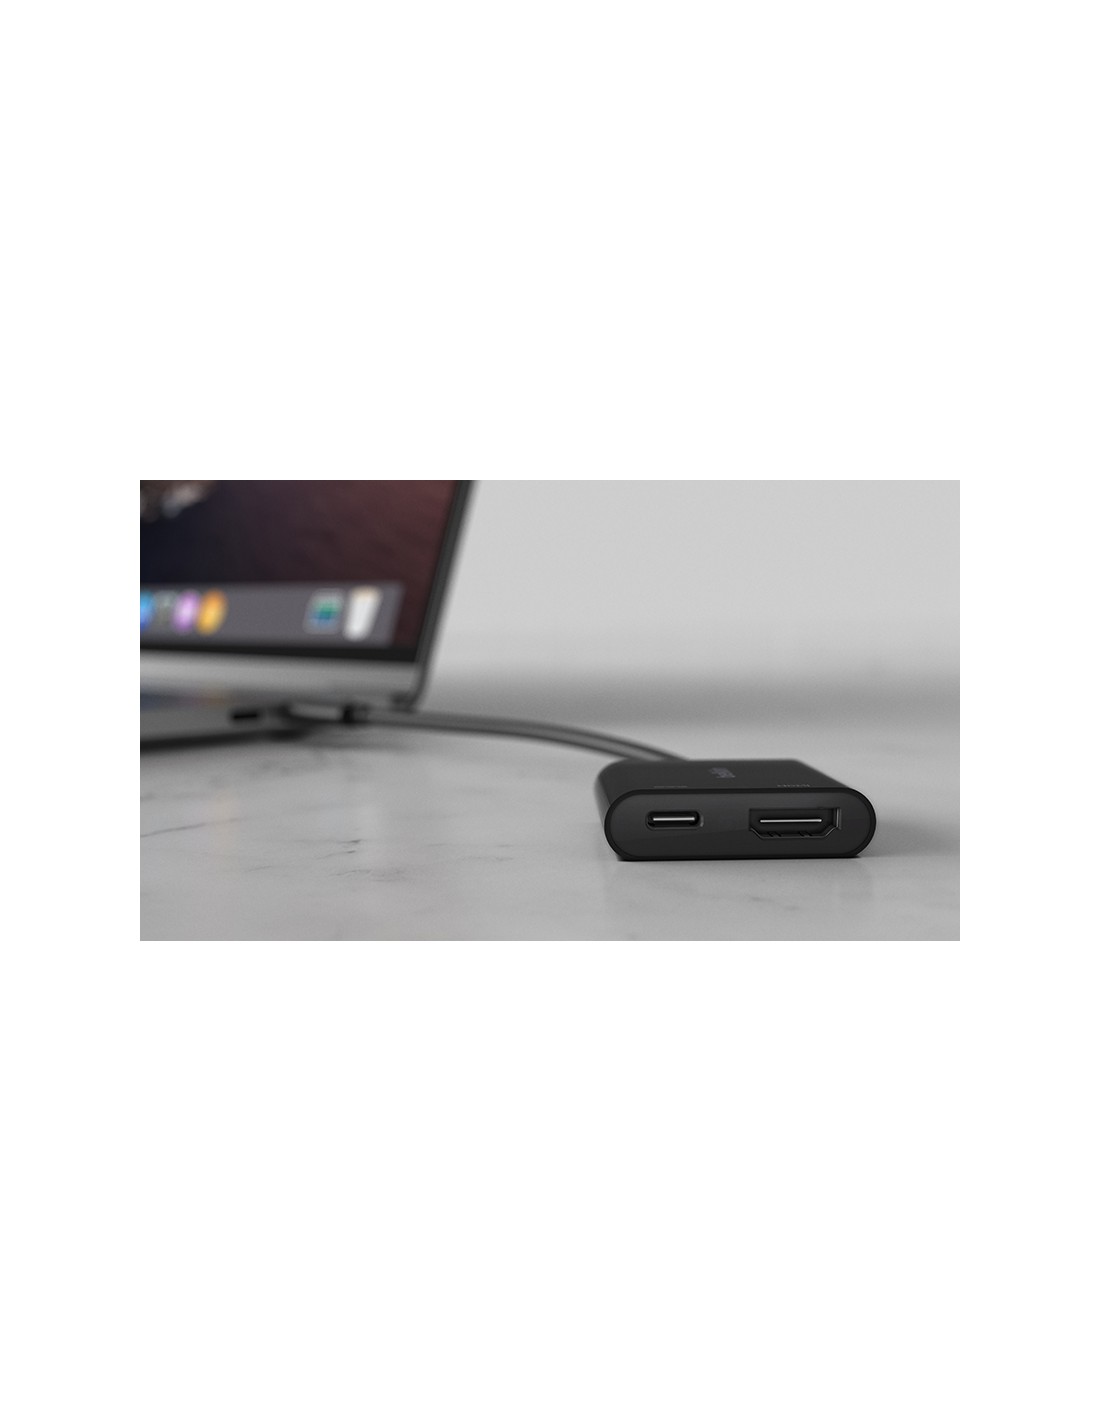 Adaptateur USB-C vers HDMI + recharge, Belkin